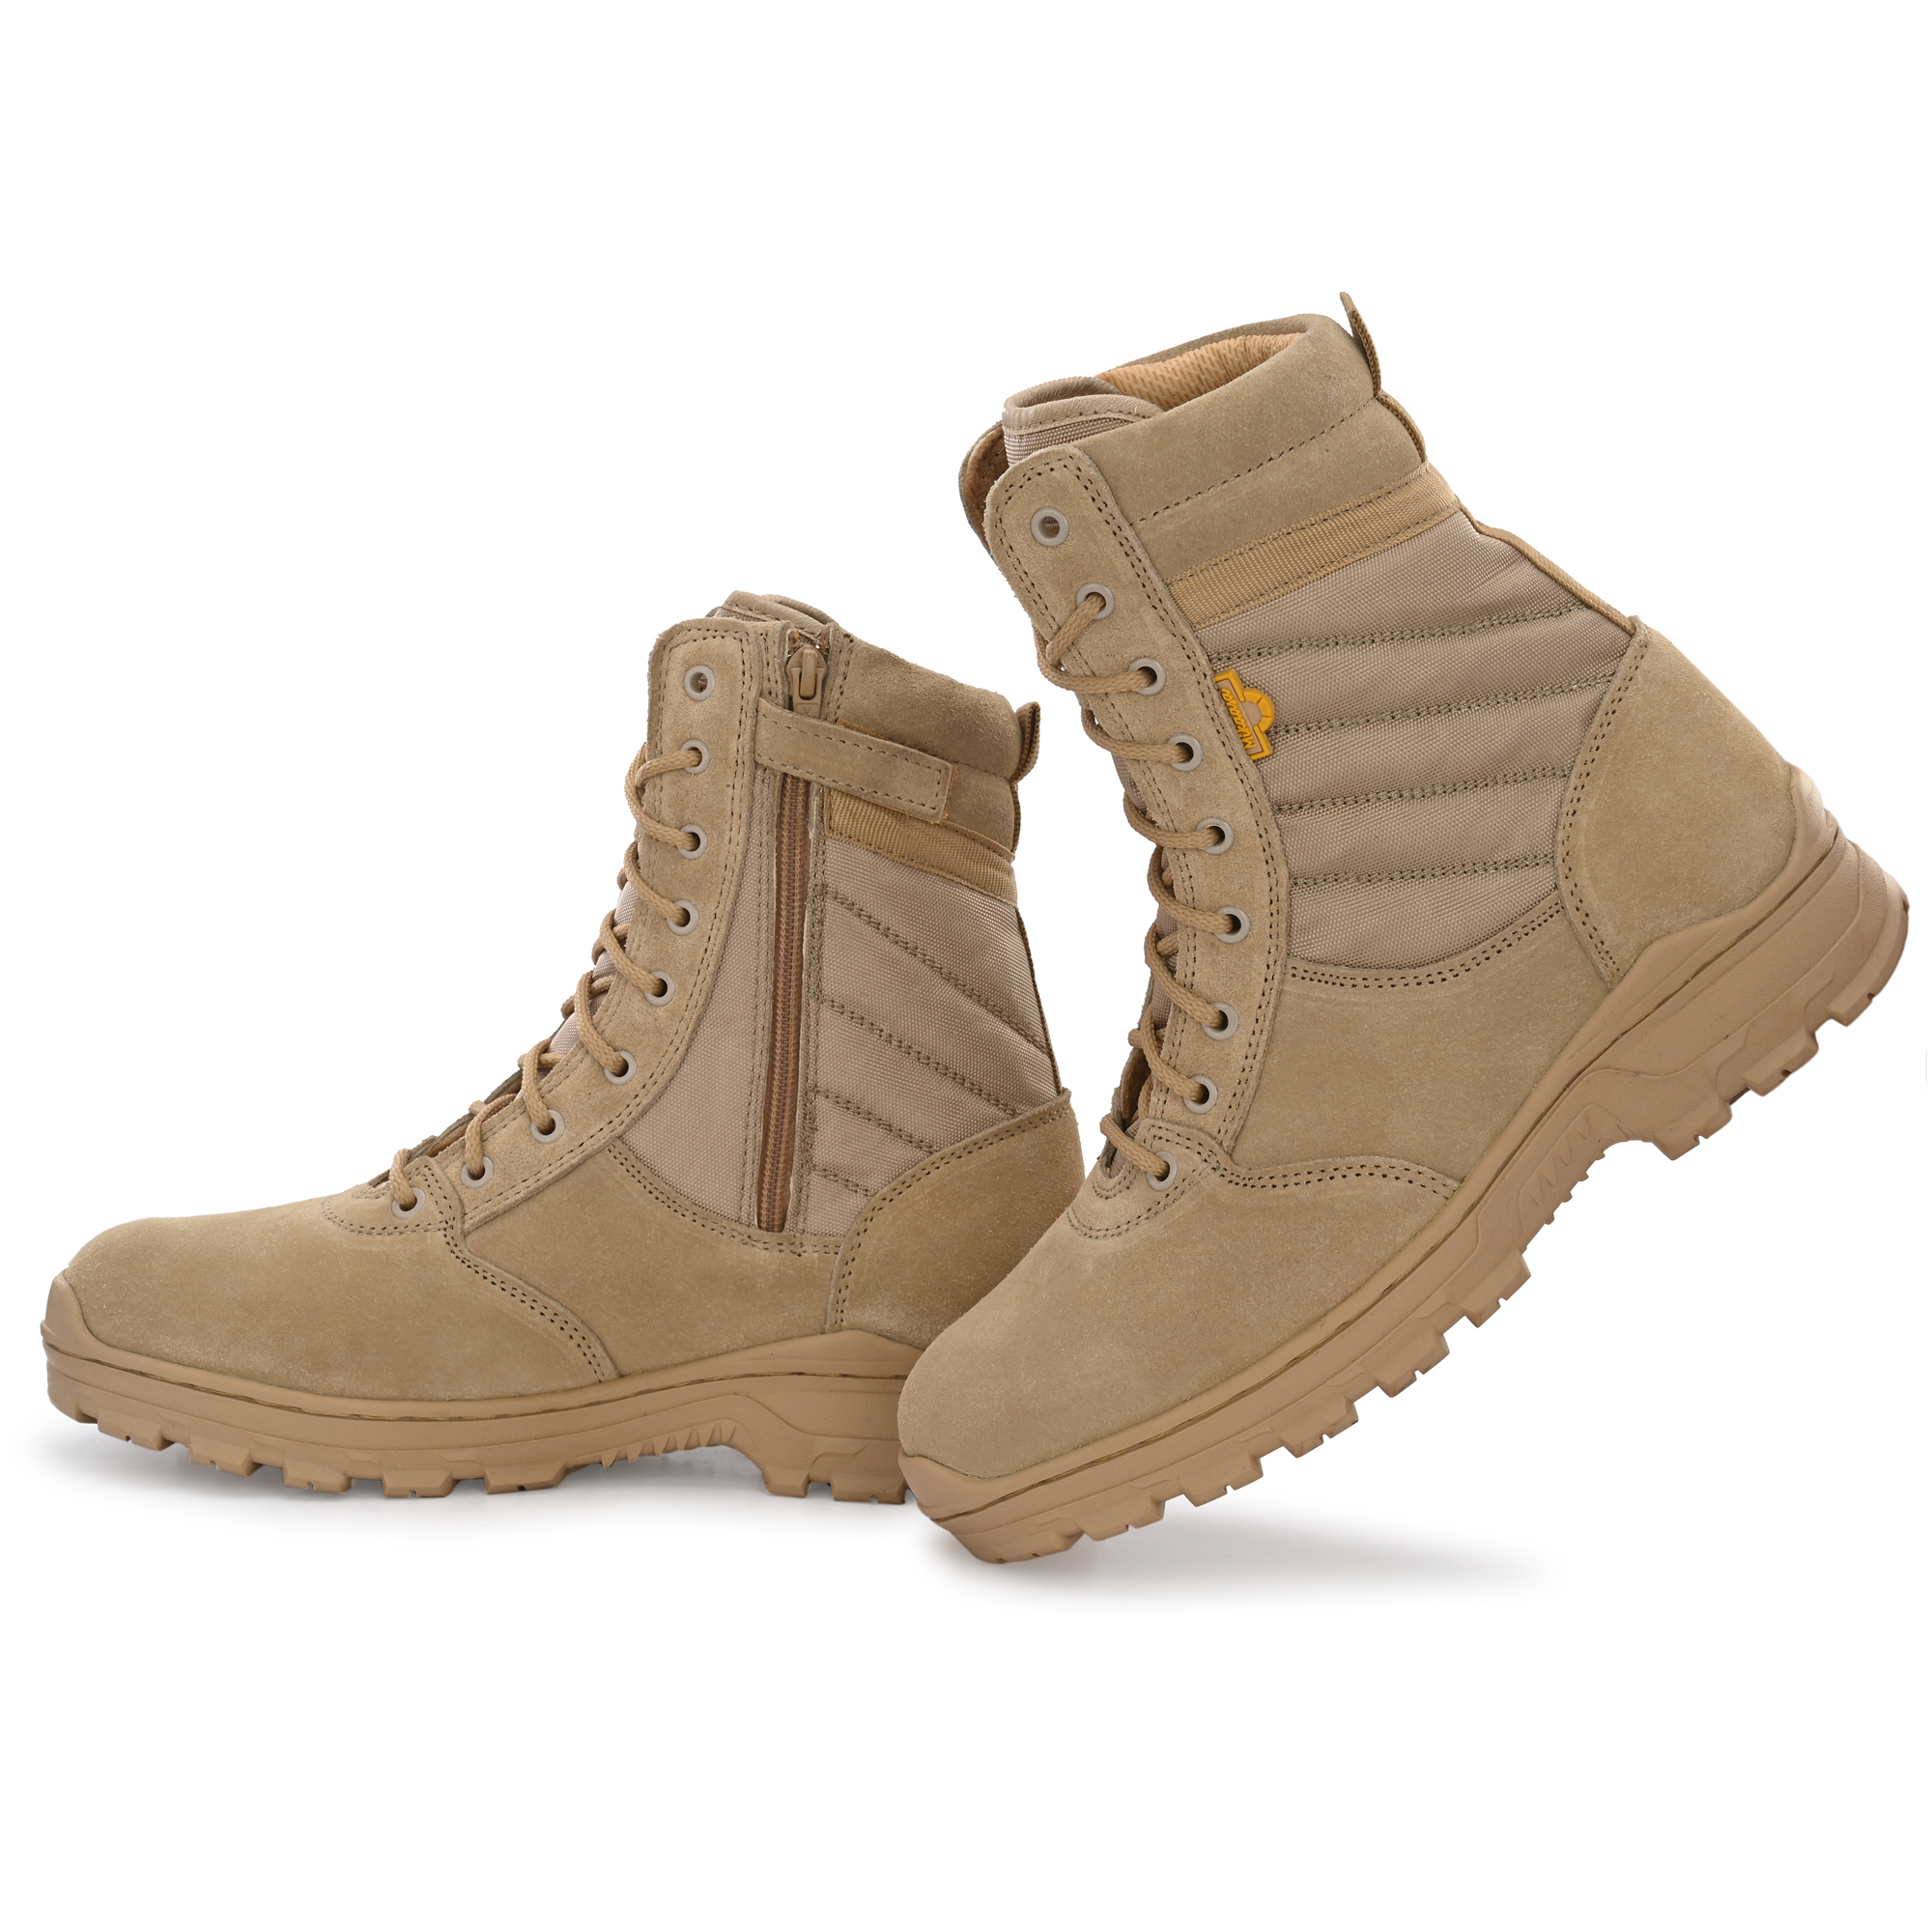 Combat Boots, Military Boots, Tactical Boots